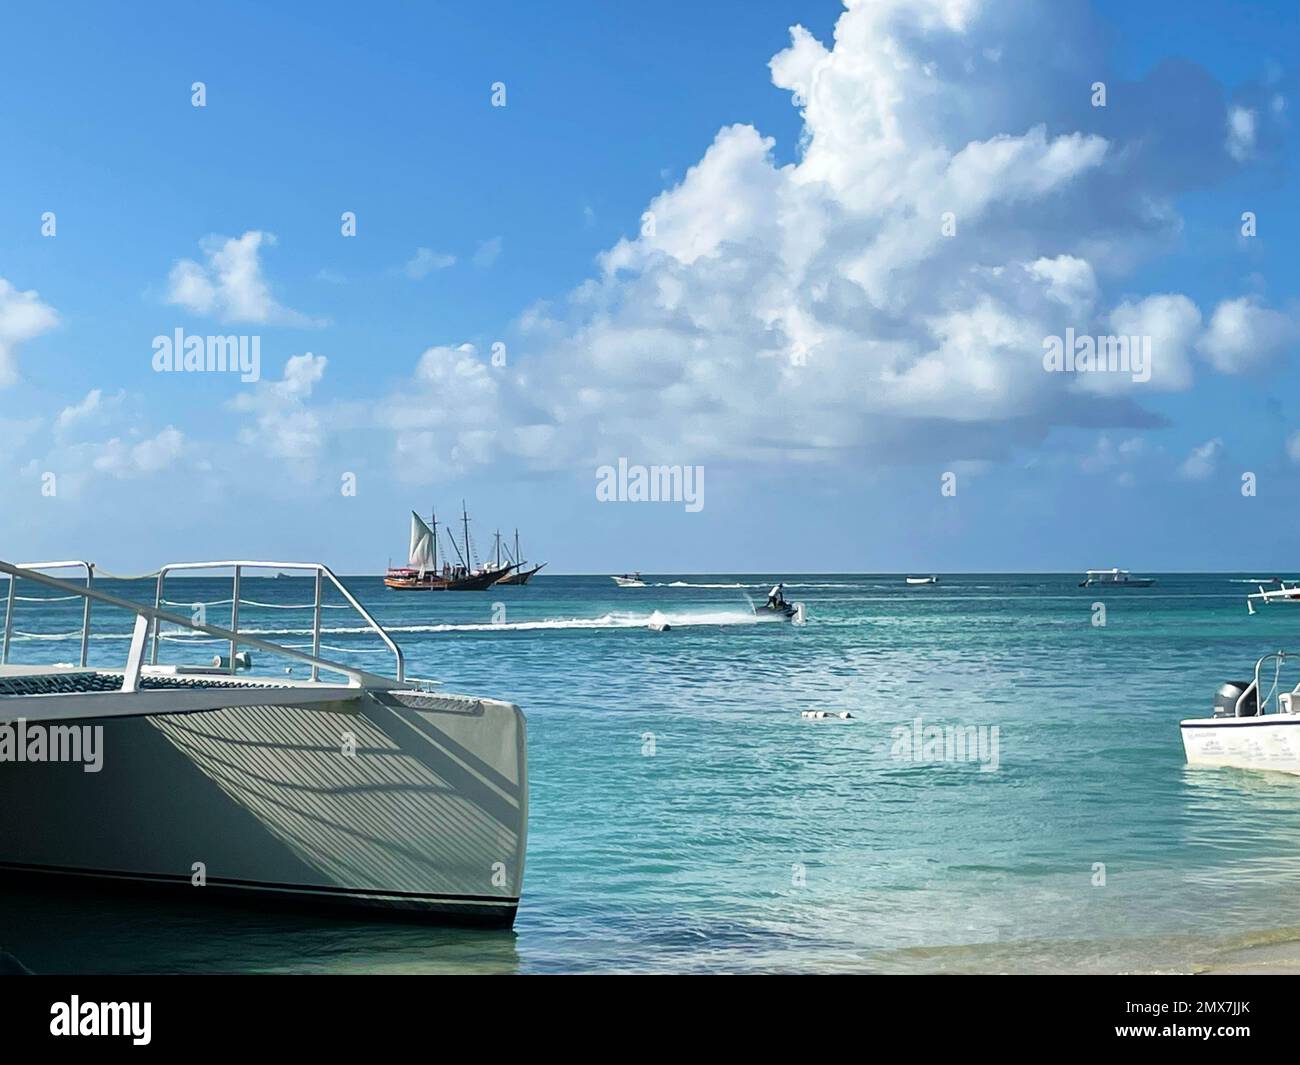 Sailboats and personal watercraft on the Caribbean sea, off the coast of Aruba. Stock Photo